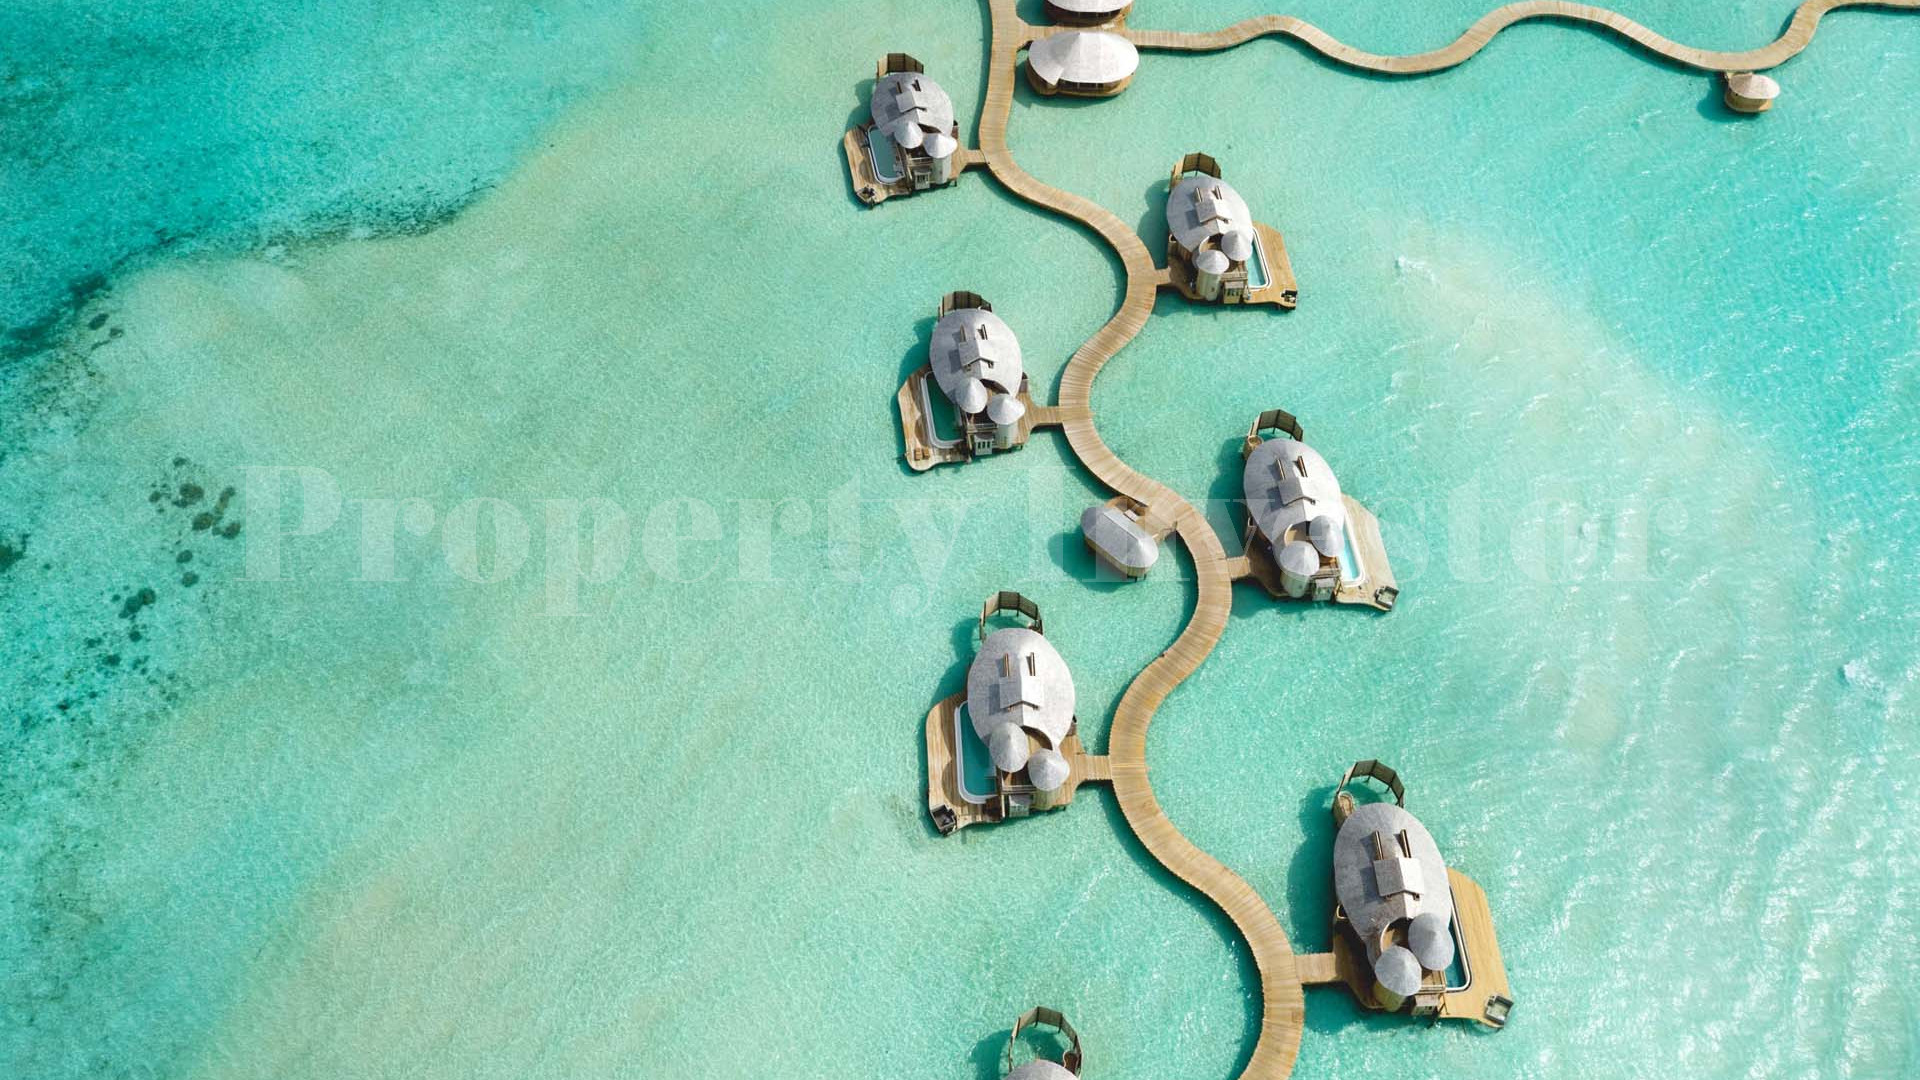 1 Bedroom Overwater Villa (w/o slide) in the Maldives